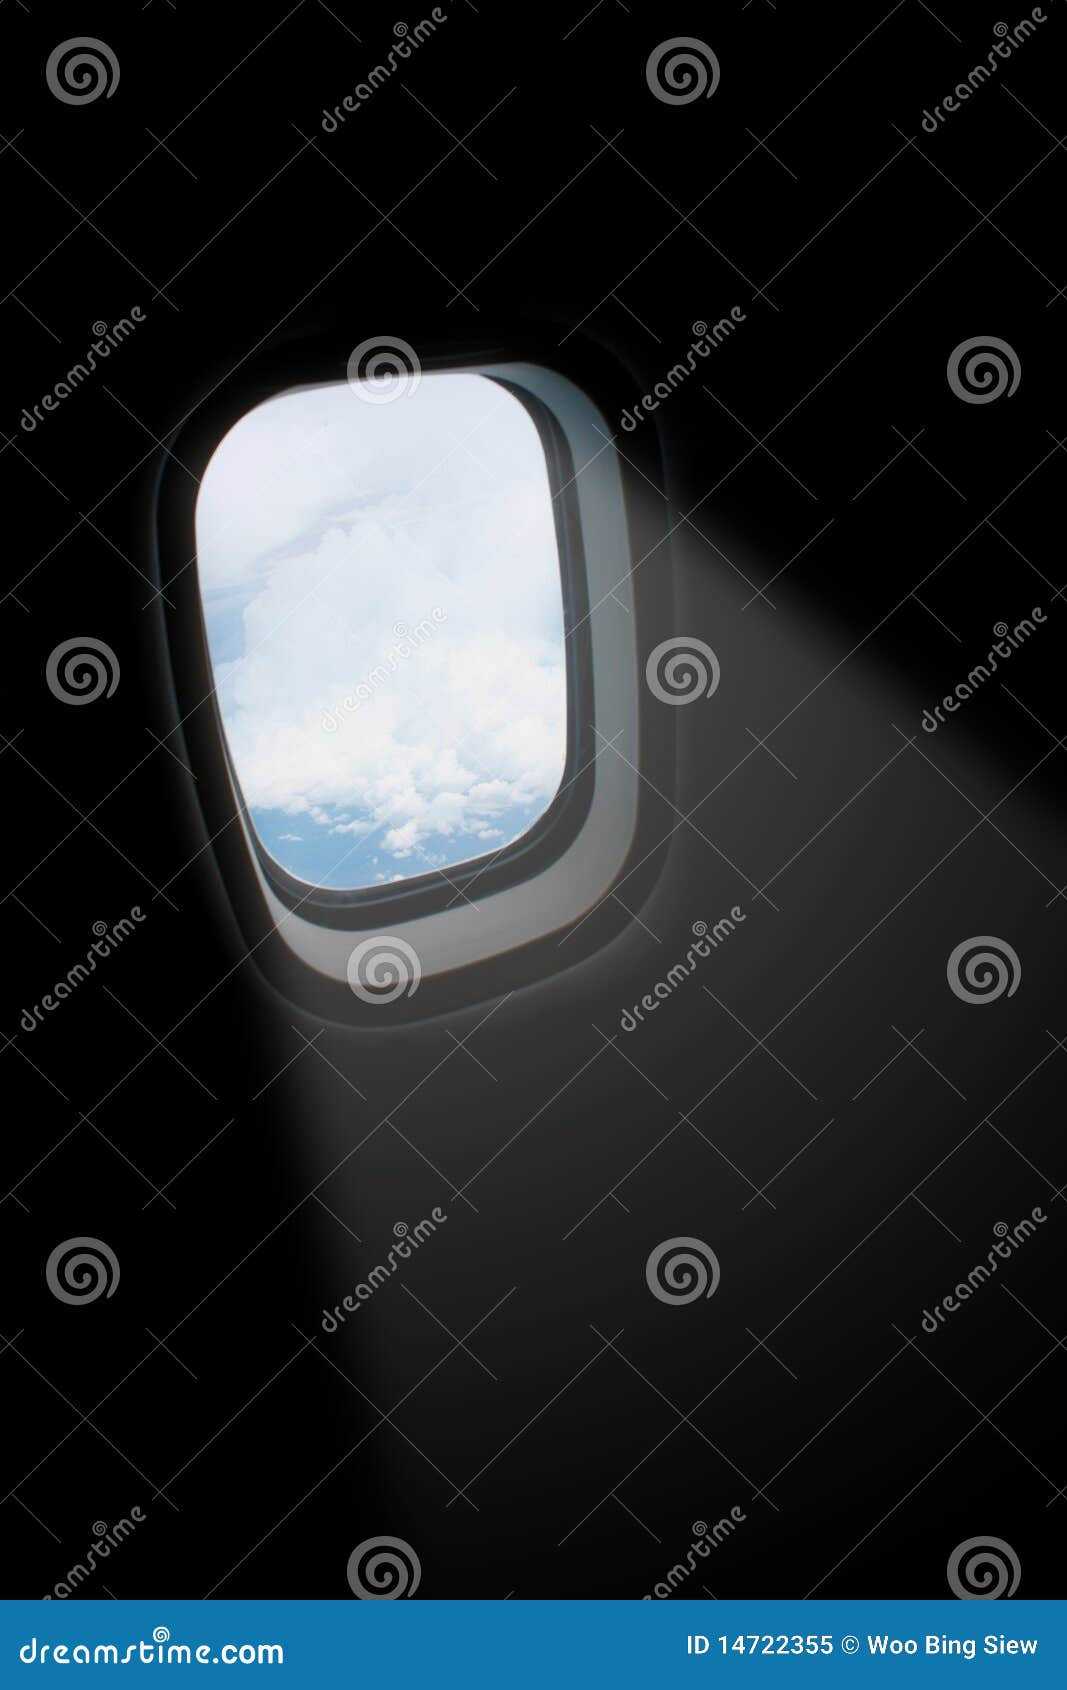 light ray from aeroplane window